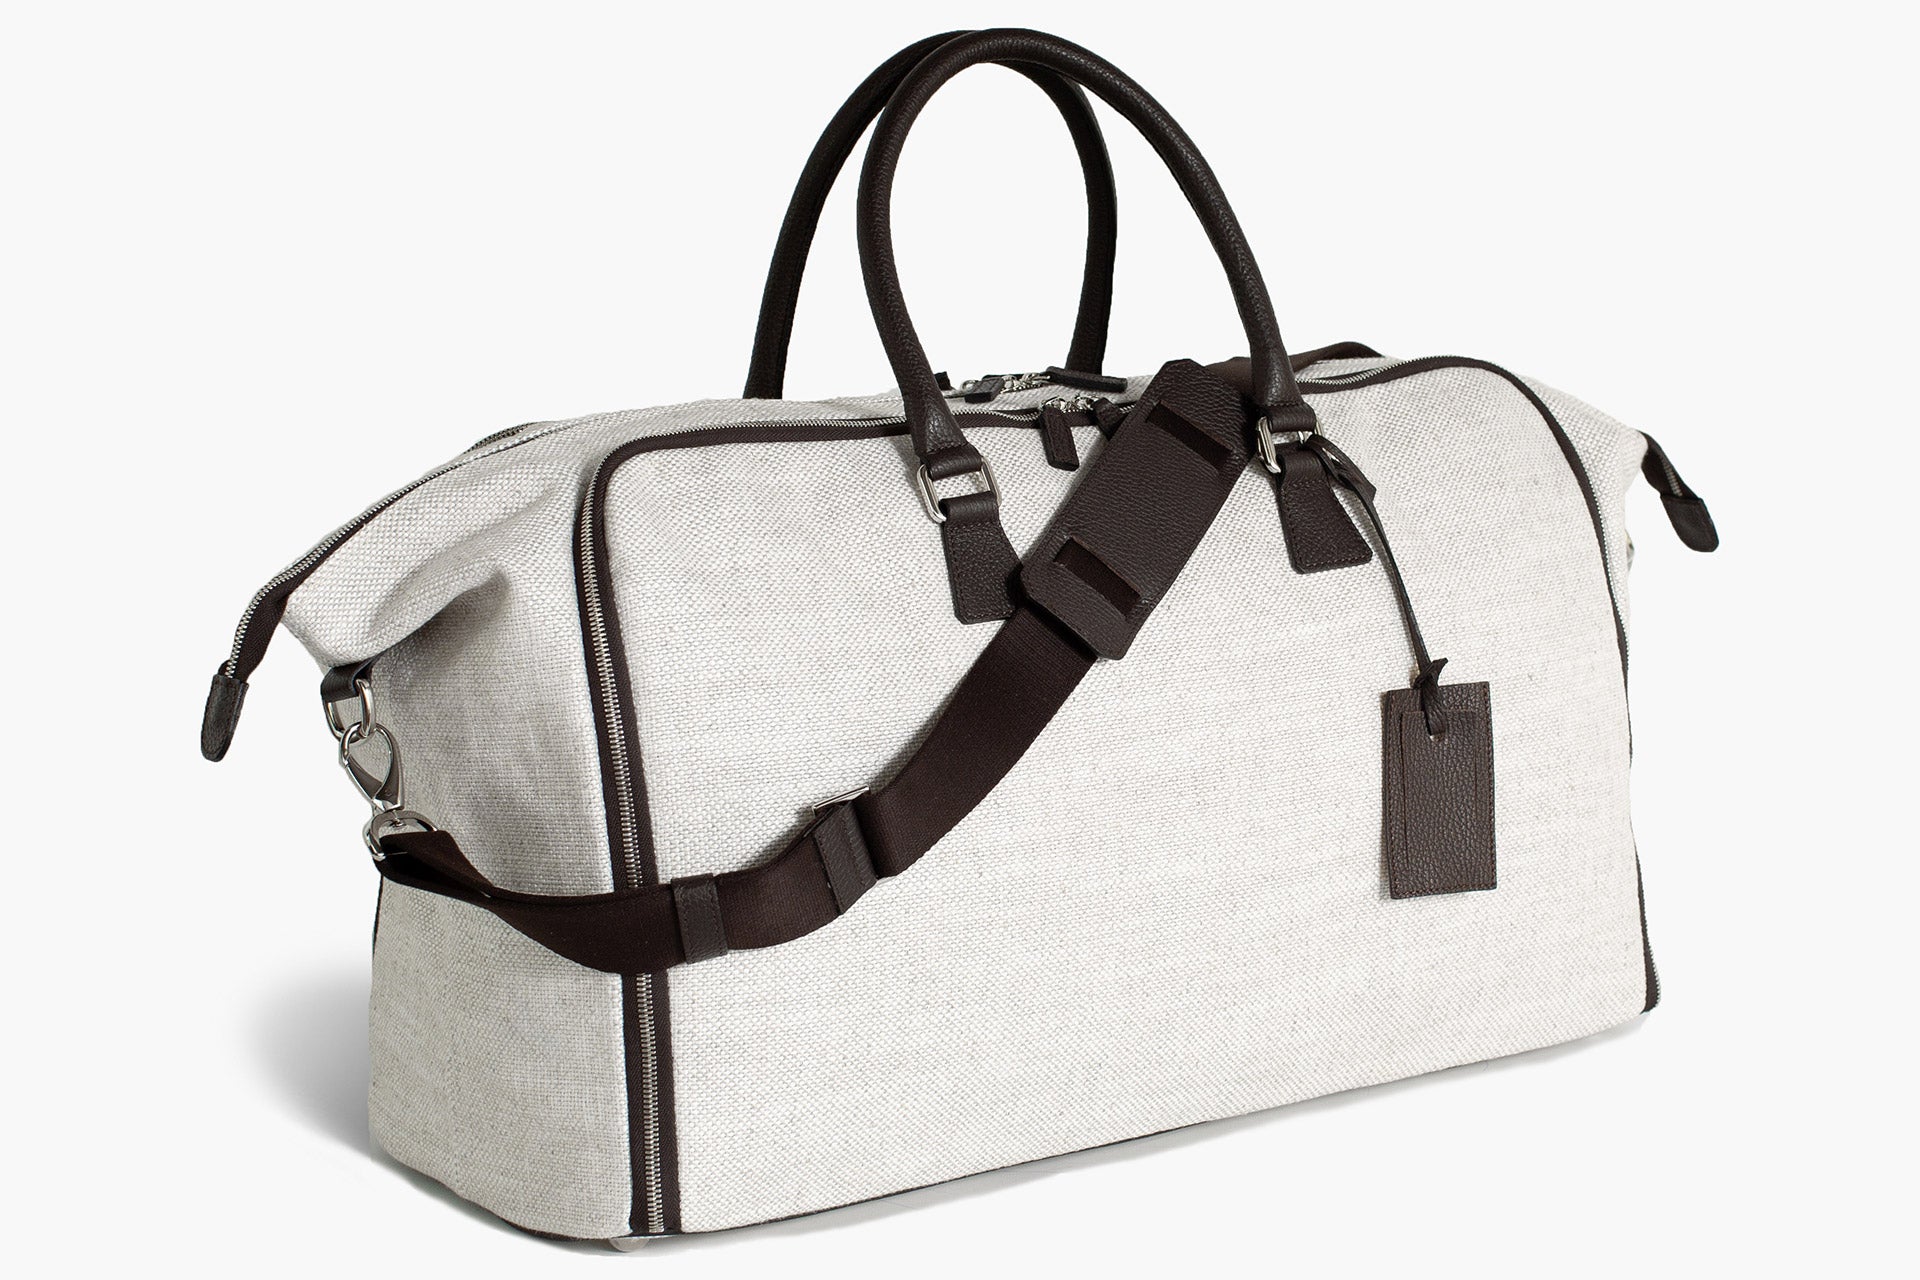 Patented Garment bag luggage  LUDOVICO MARABOTTO - Ludovico Marabotto